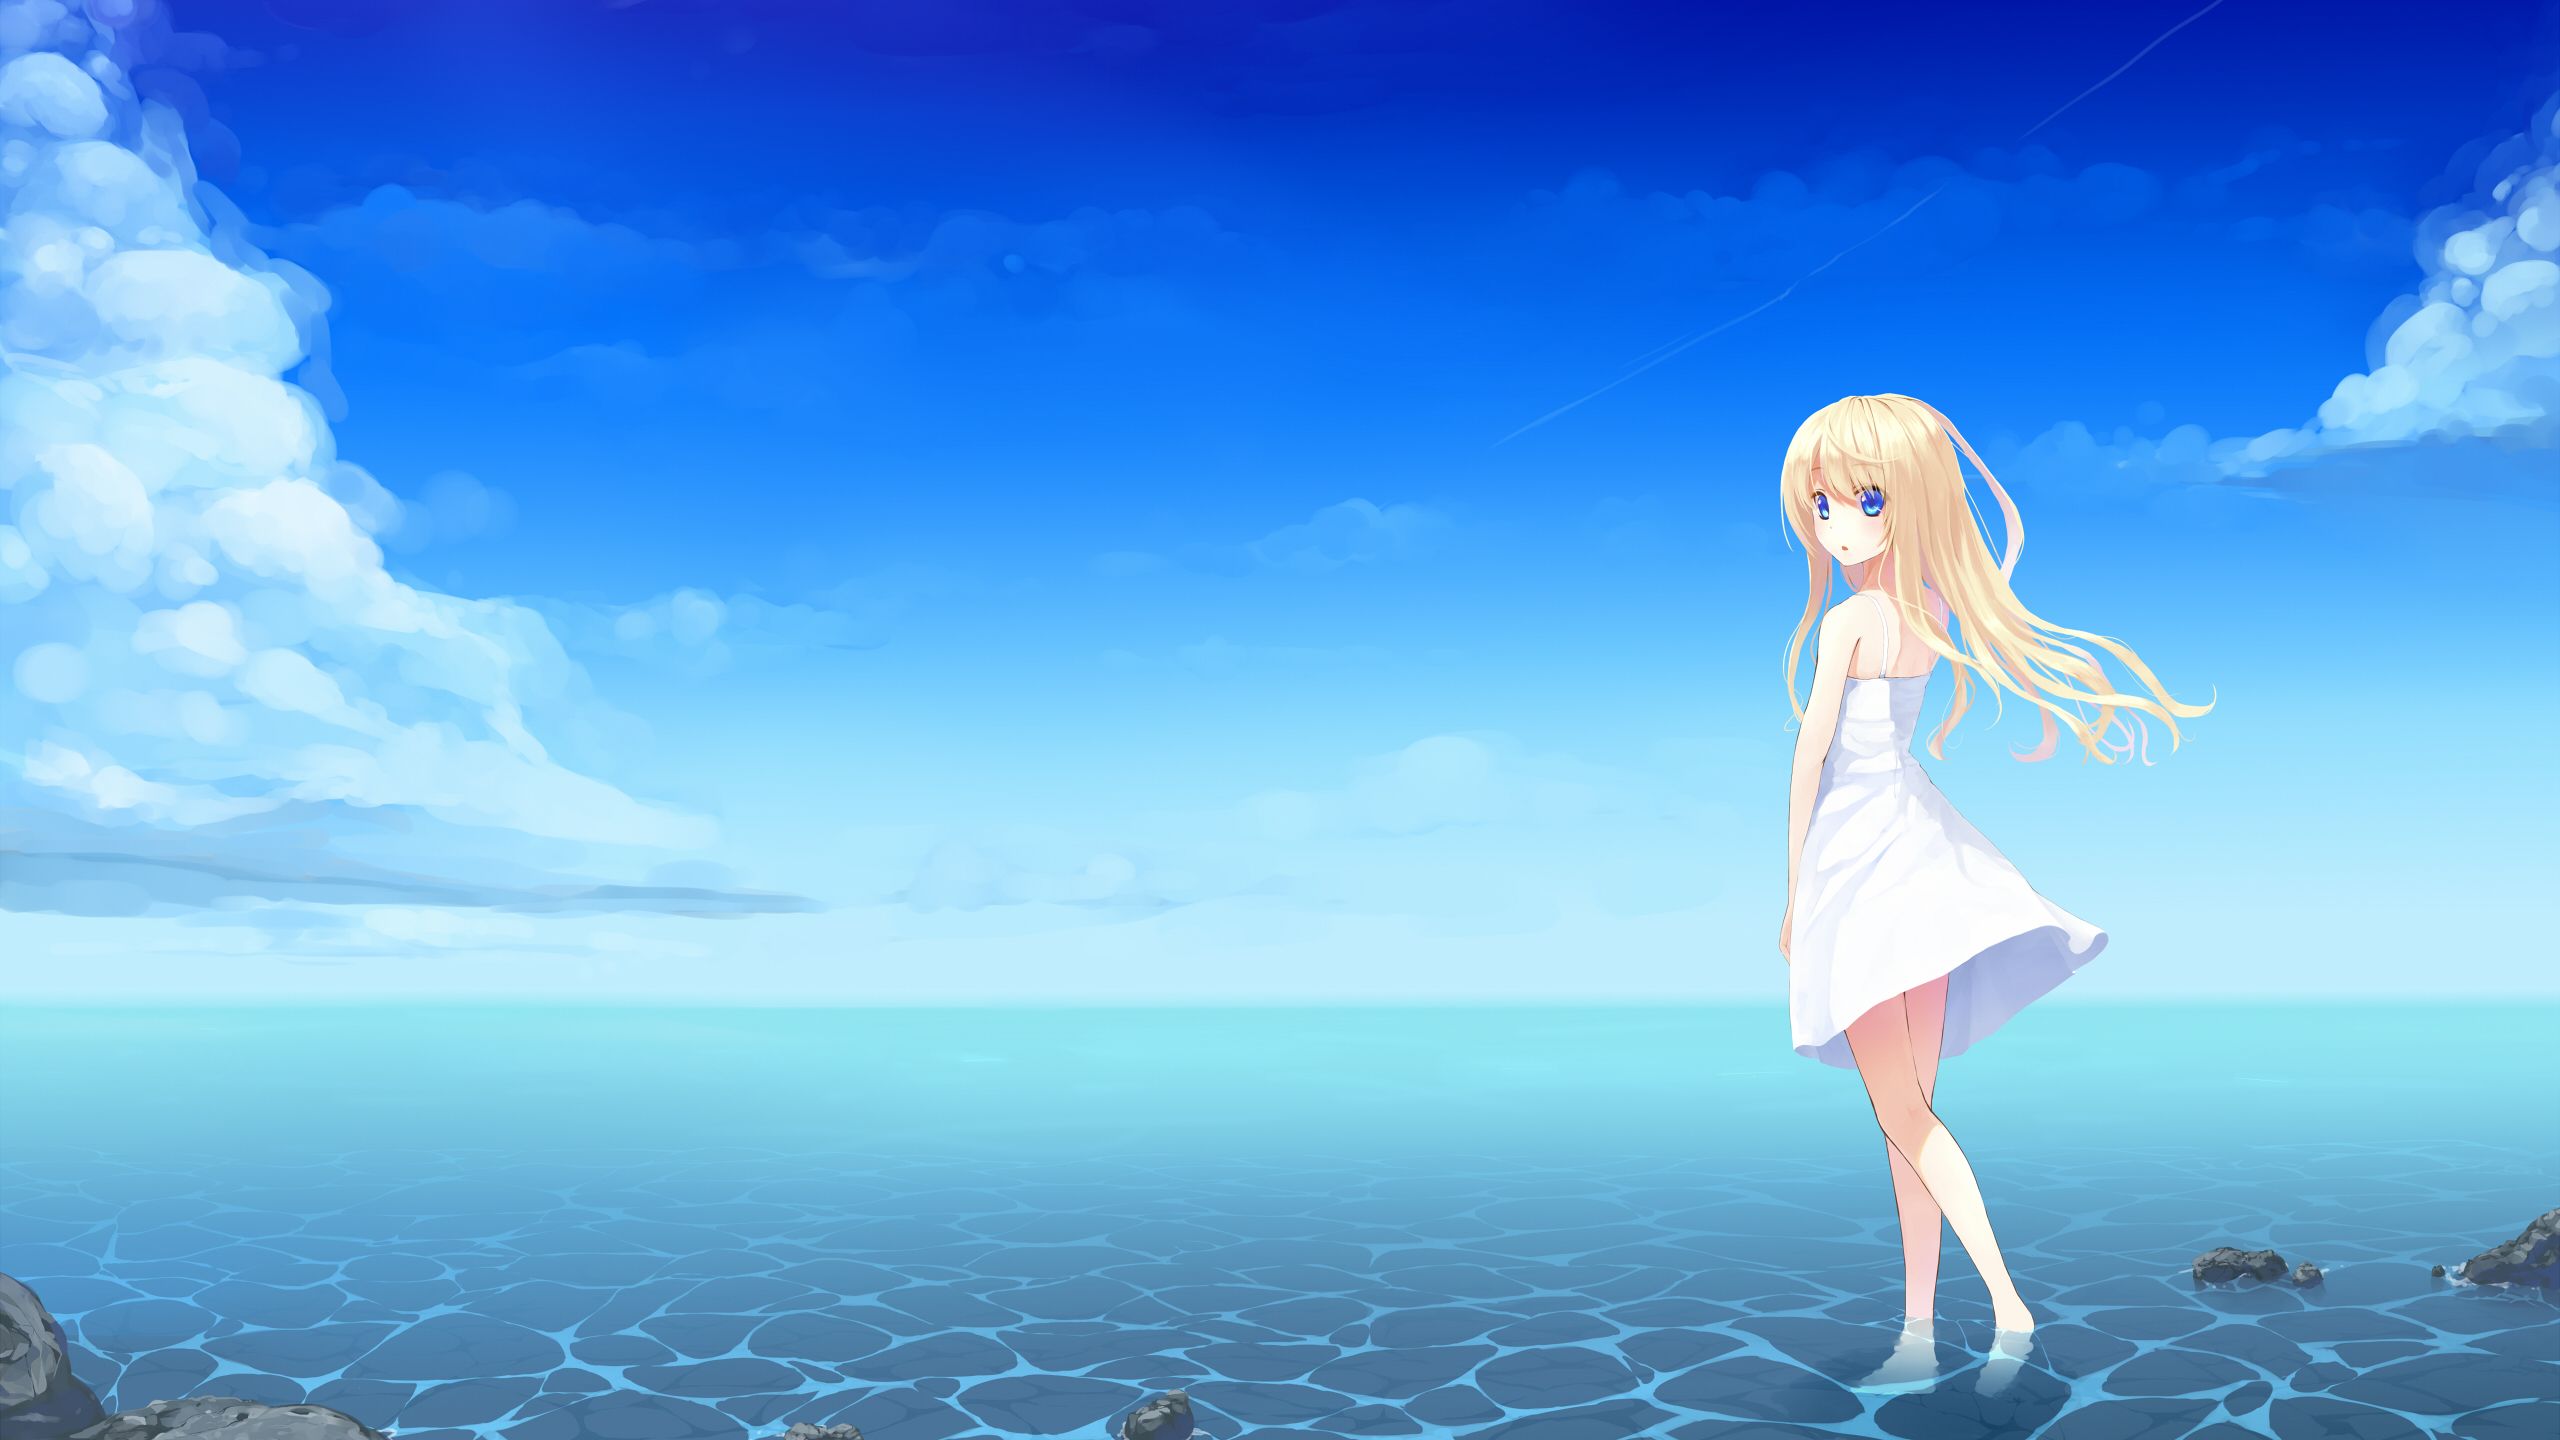 girl, anime, sea 1440P Resolution Wallpaper, HD Anime 4K Wallpaper, Image, Photo and Background